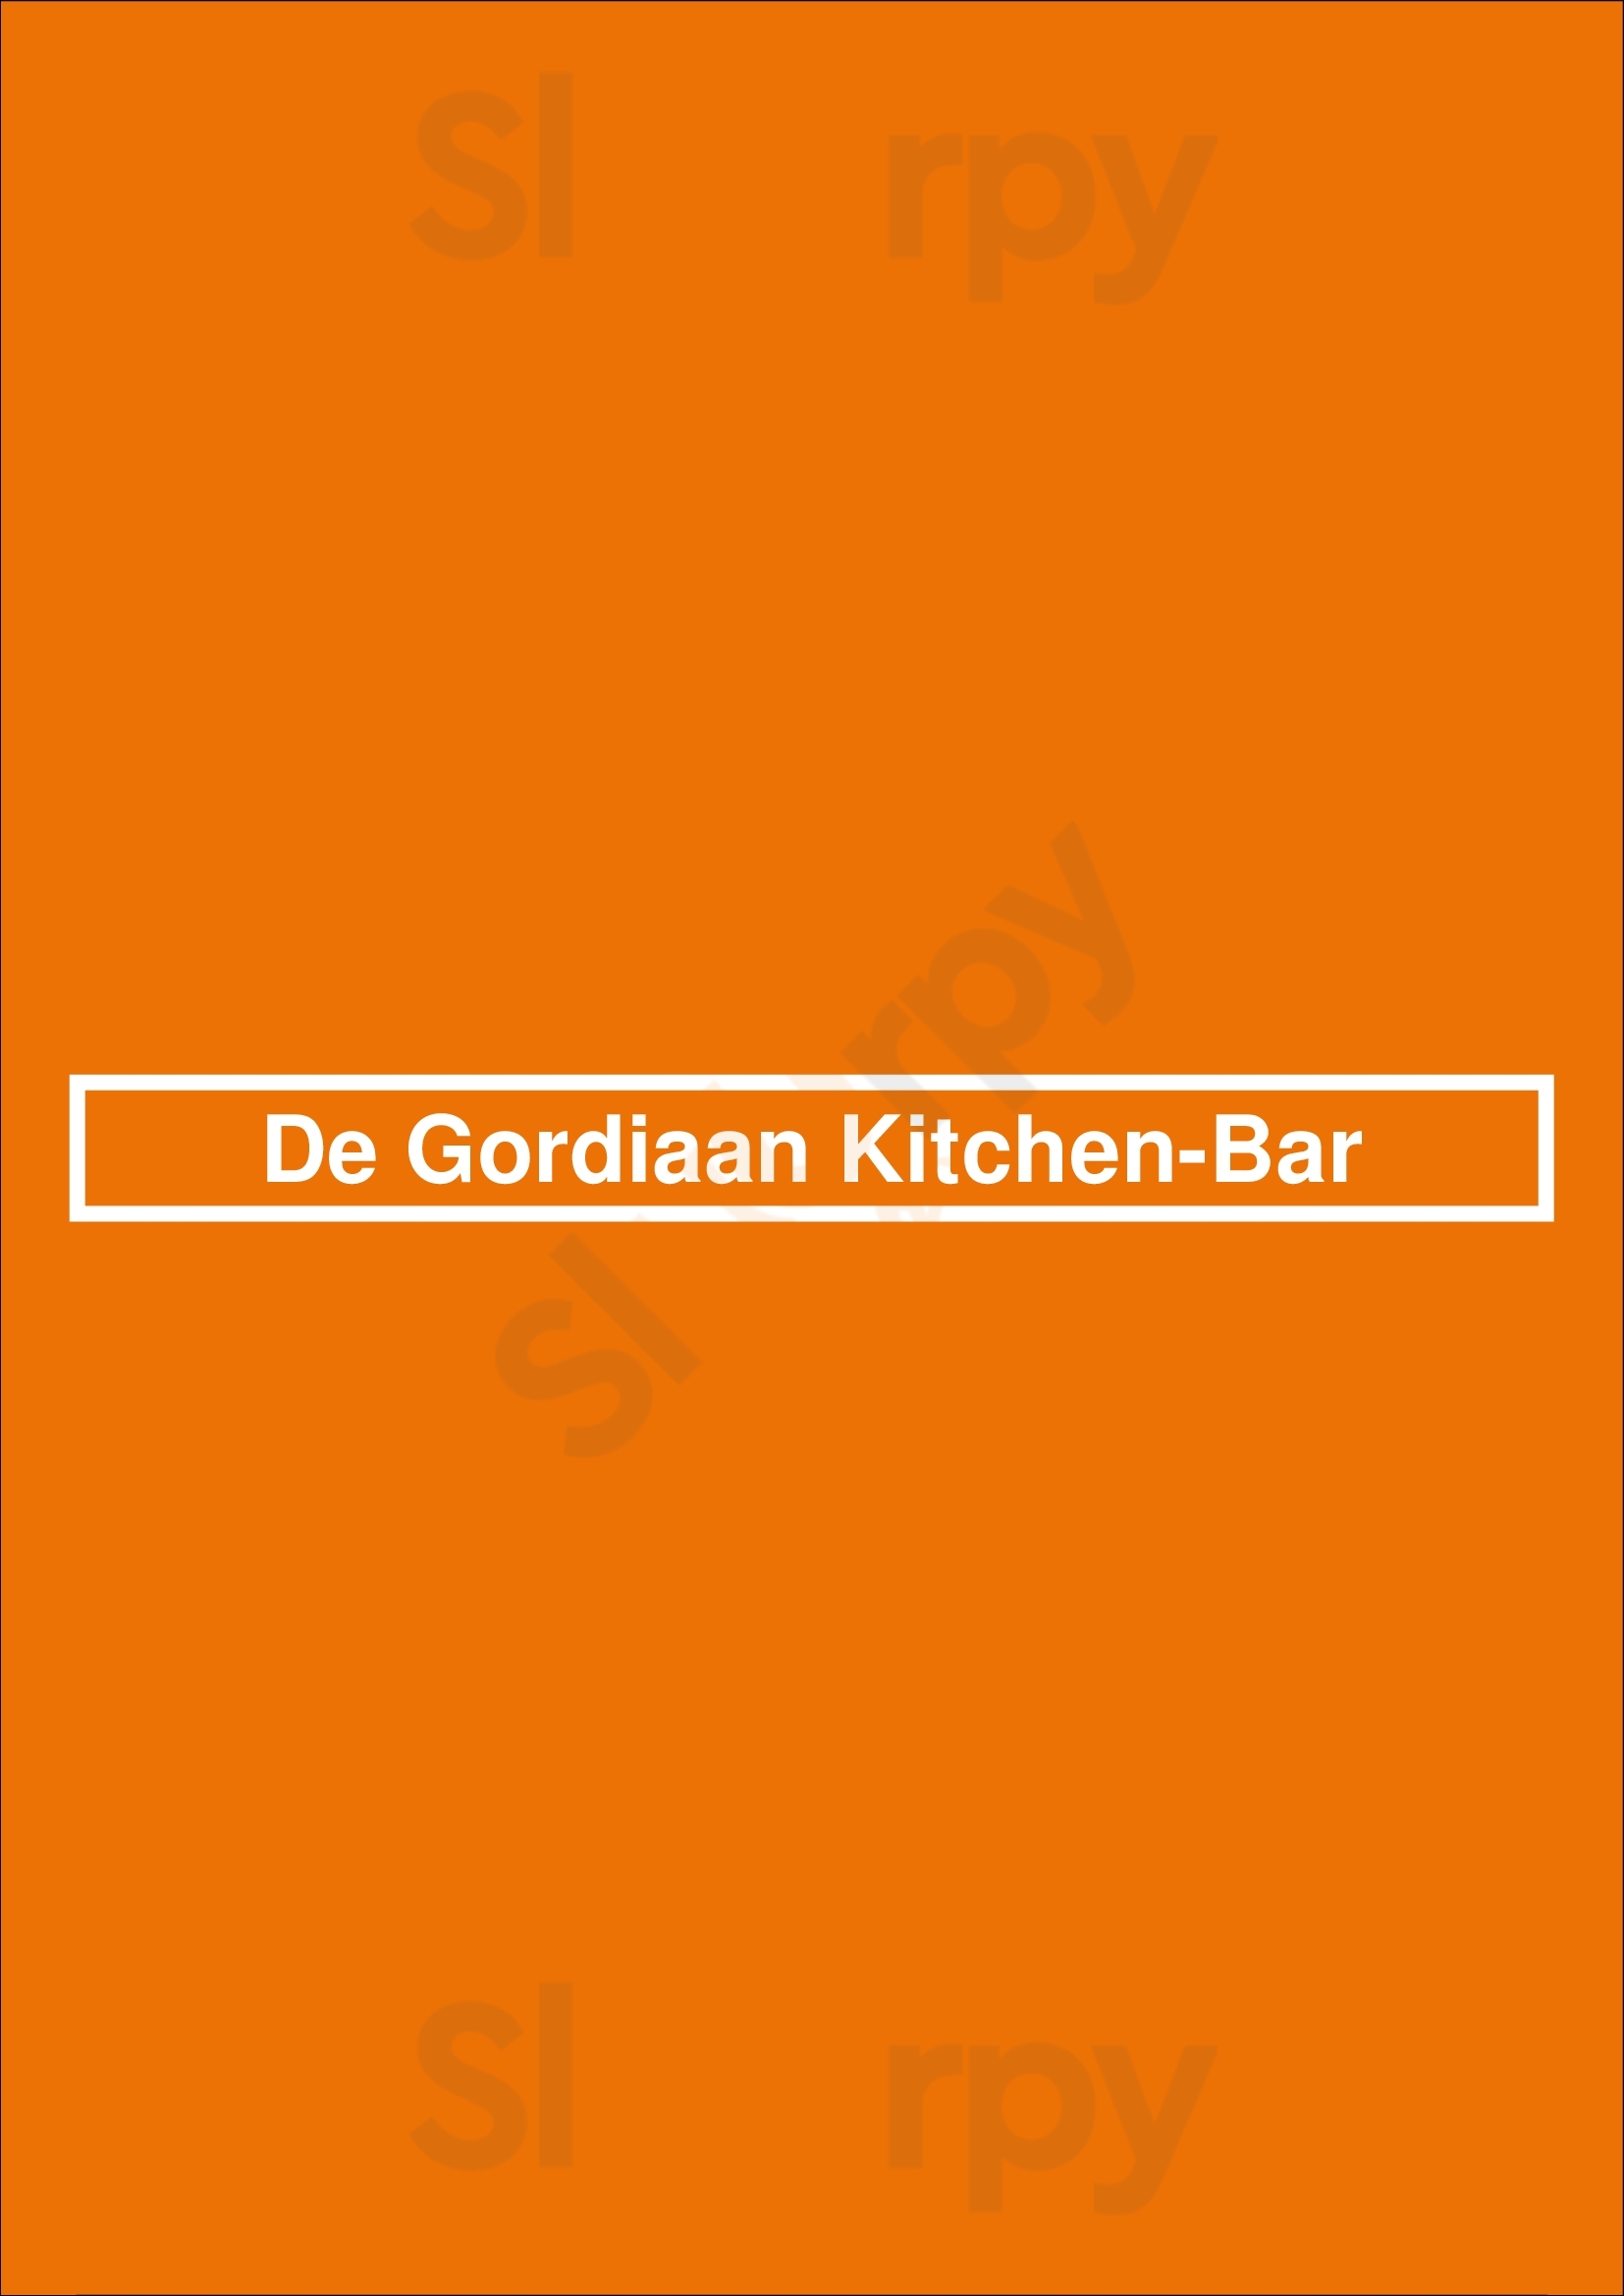 De Gordiaan Kitchen-bar Lelystad Menu - 1